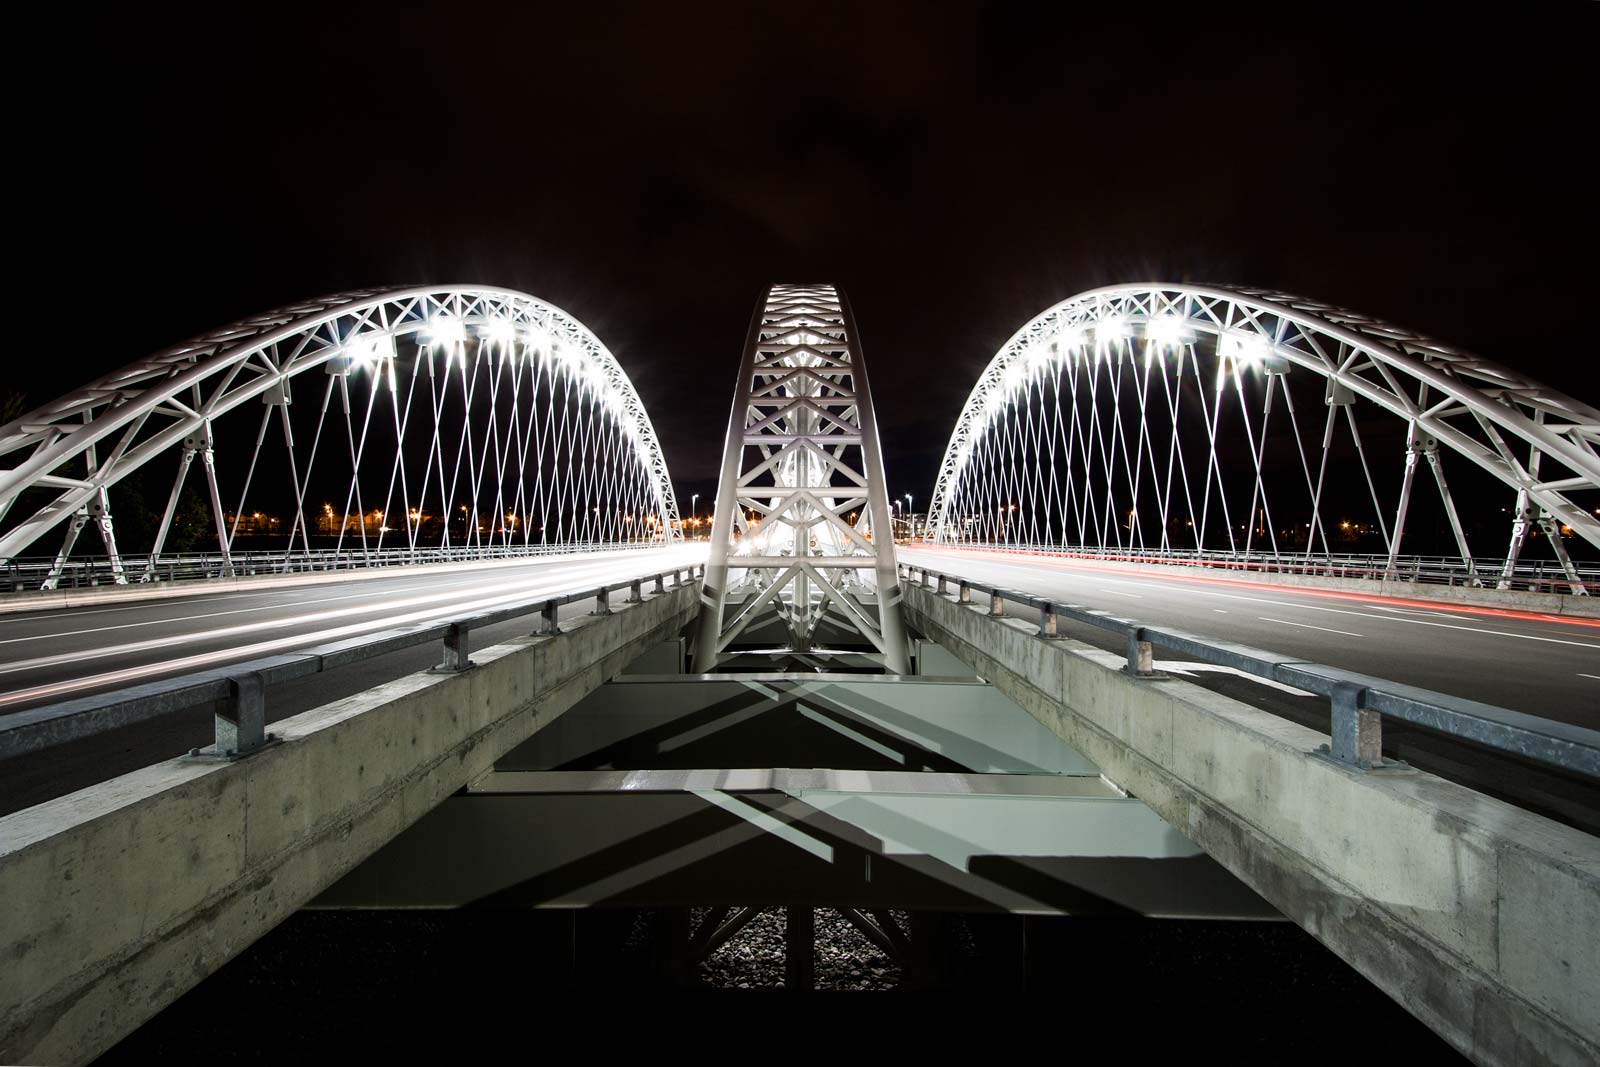 A night time view of Vimy Bridge in Ottawa